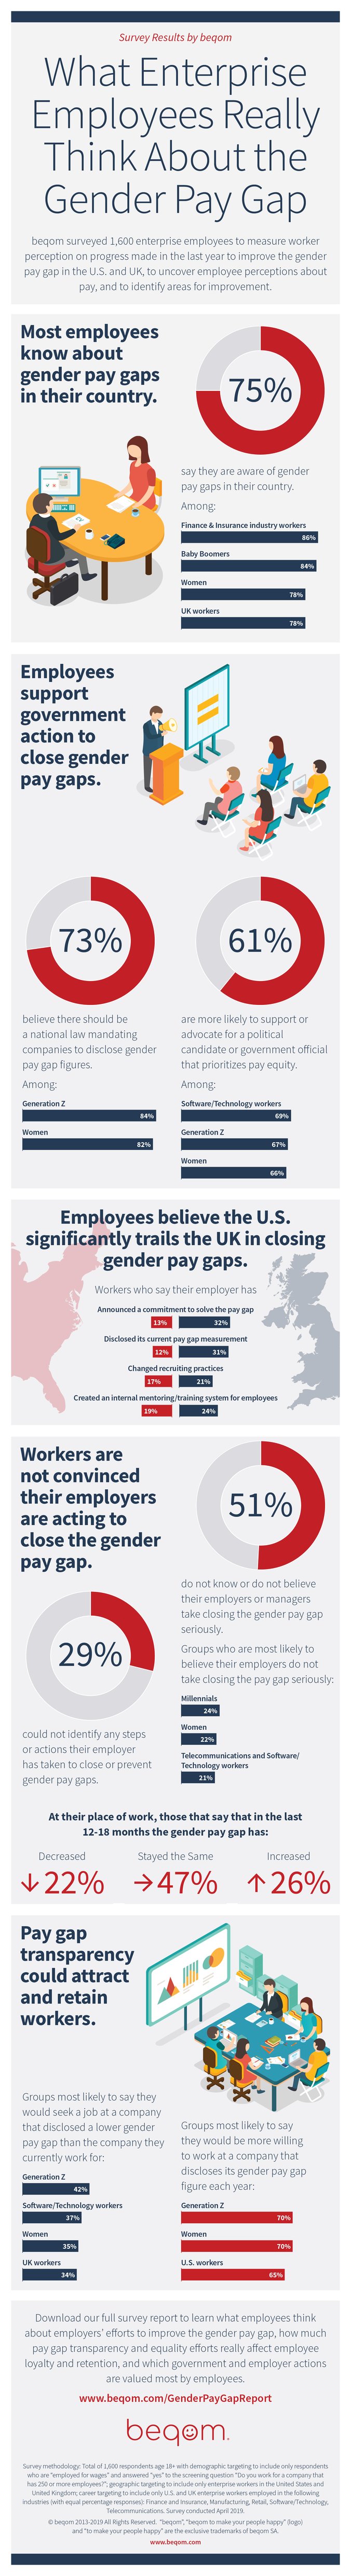 Gender_Pay_Gap_Infographic_v3